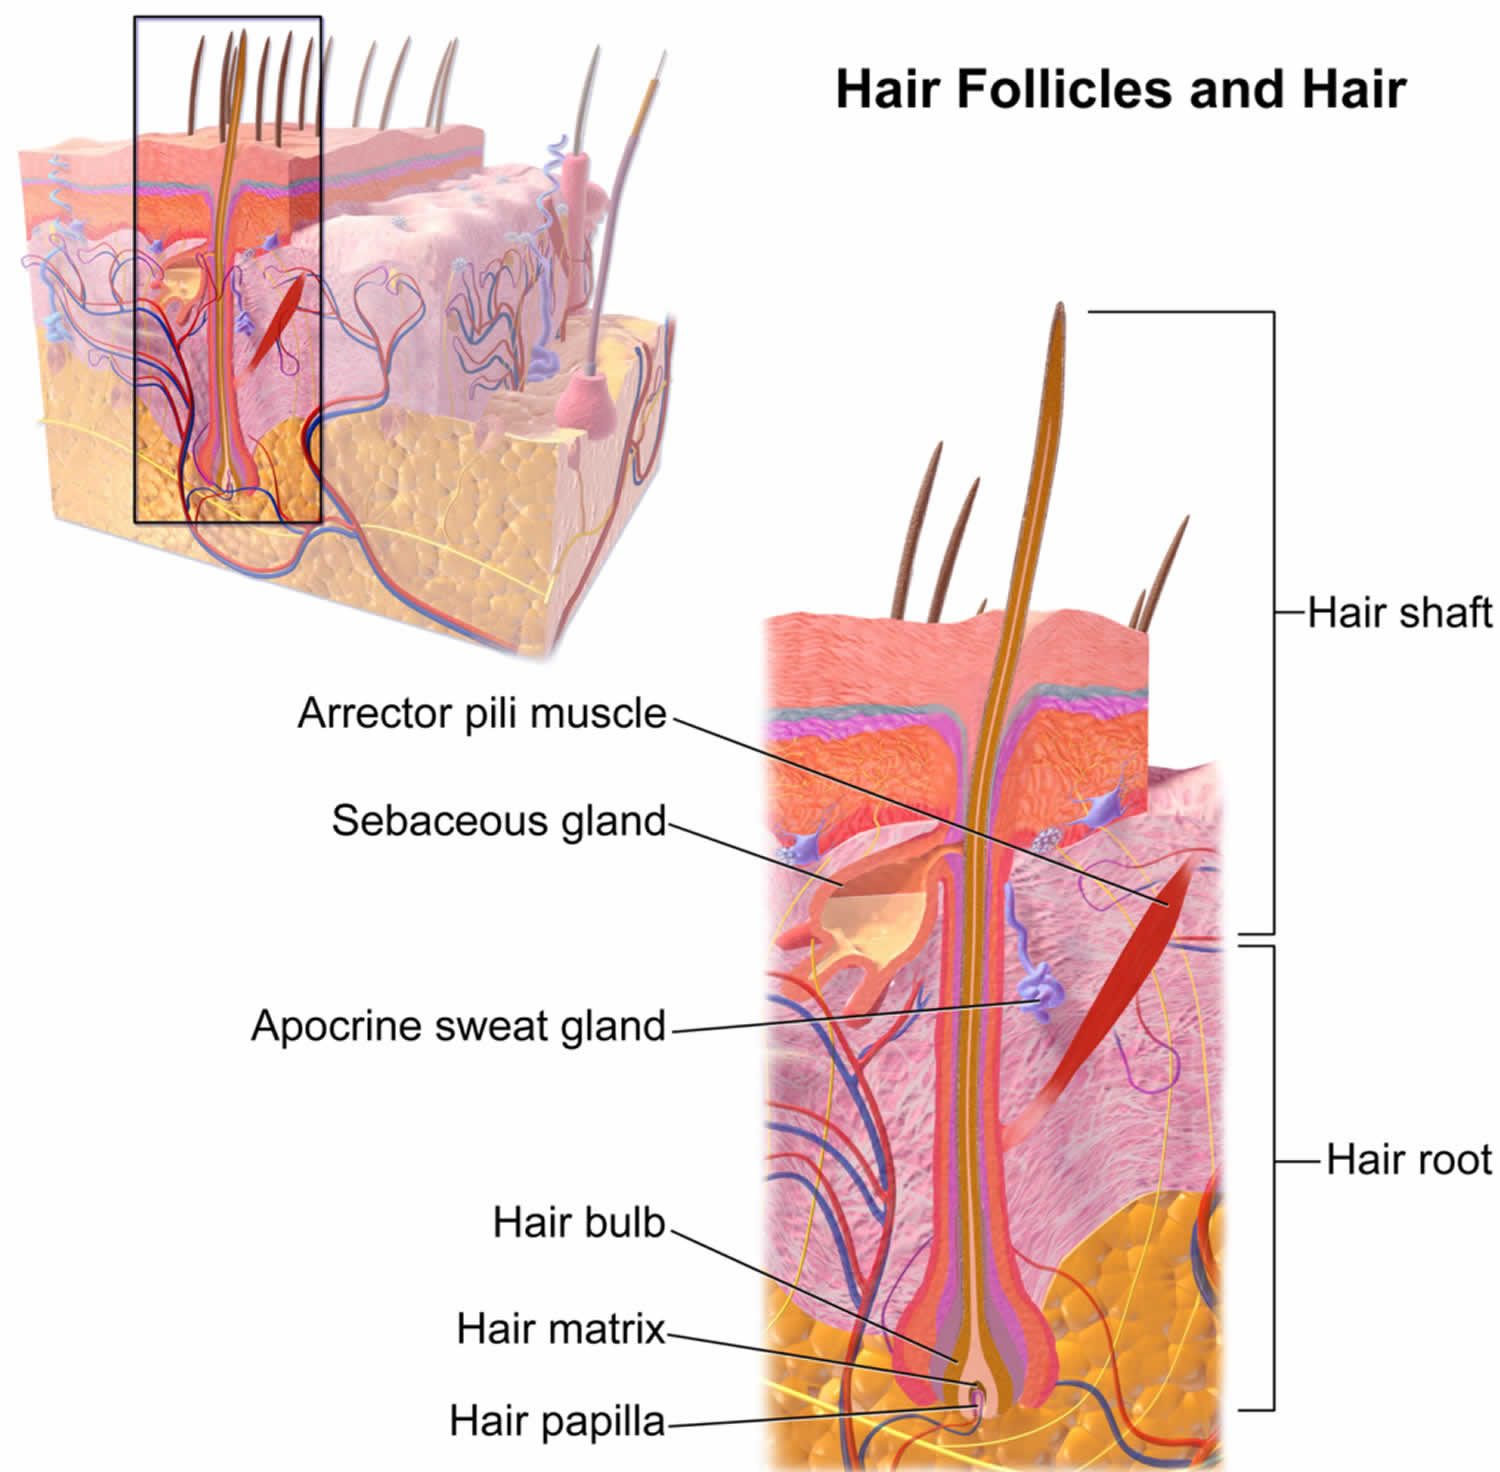 Preventing Ingrown Hairs